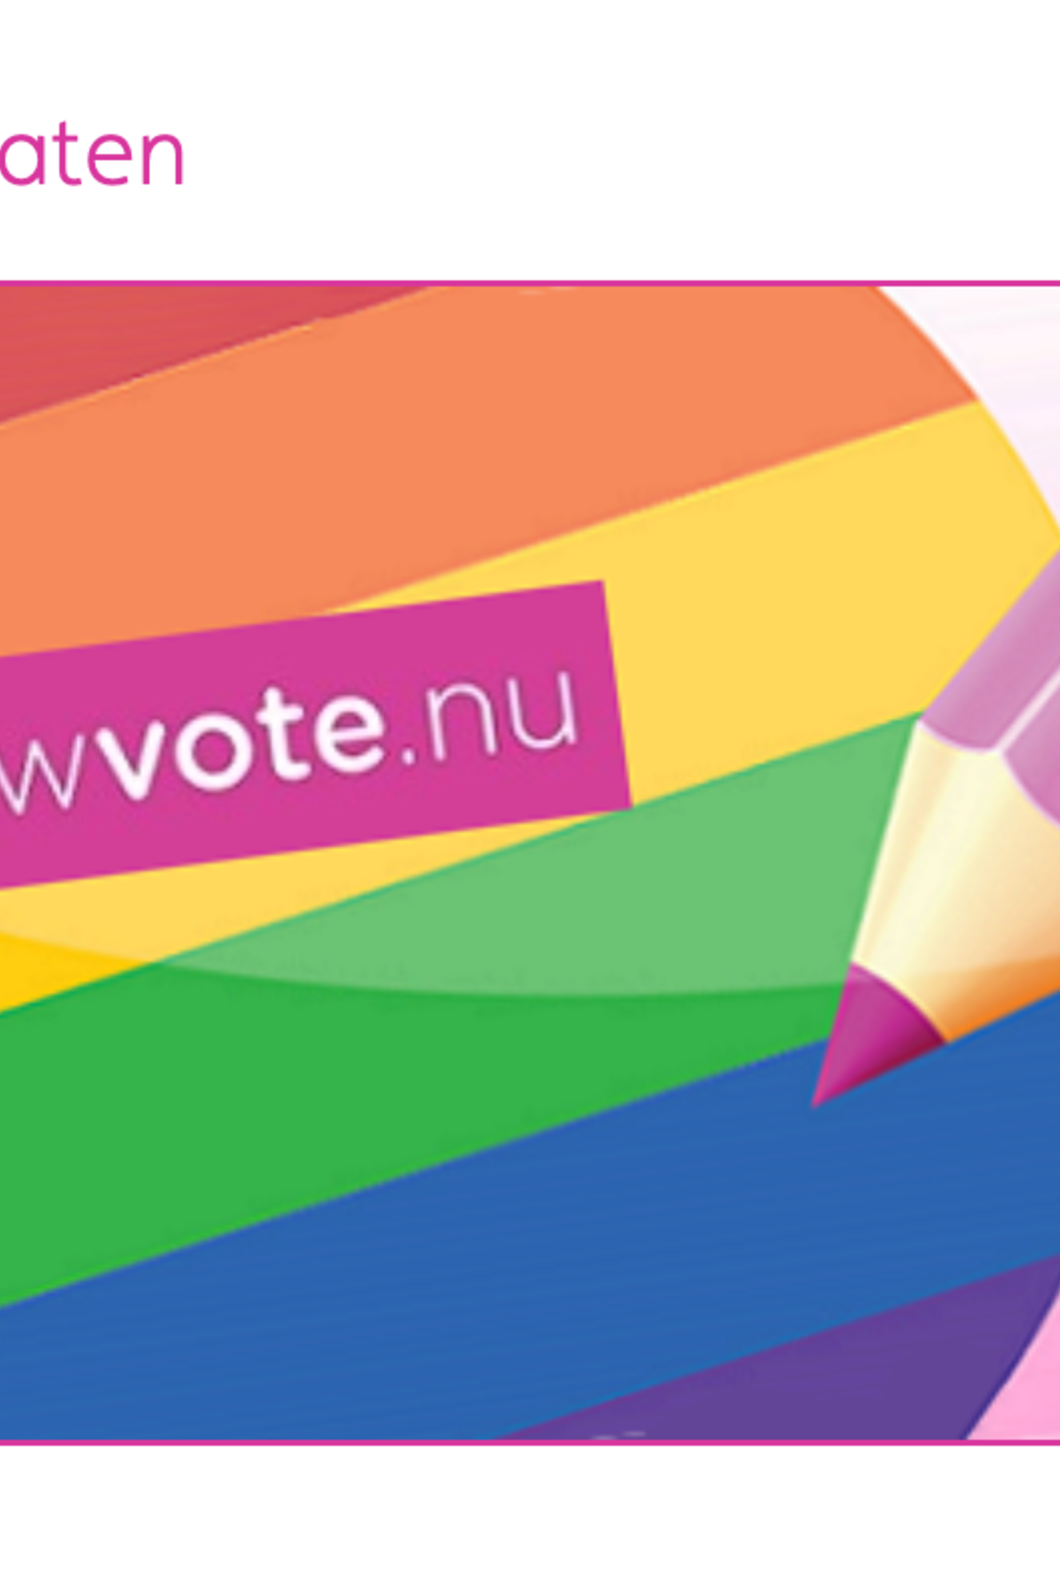 Logo van rainbowvote van COC Nederland